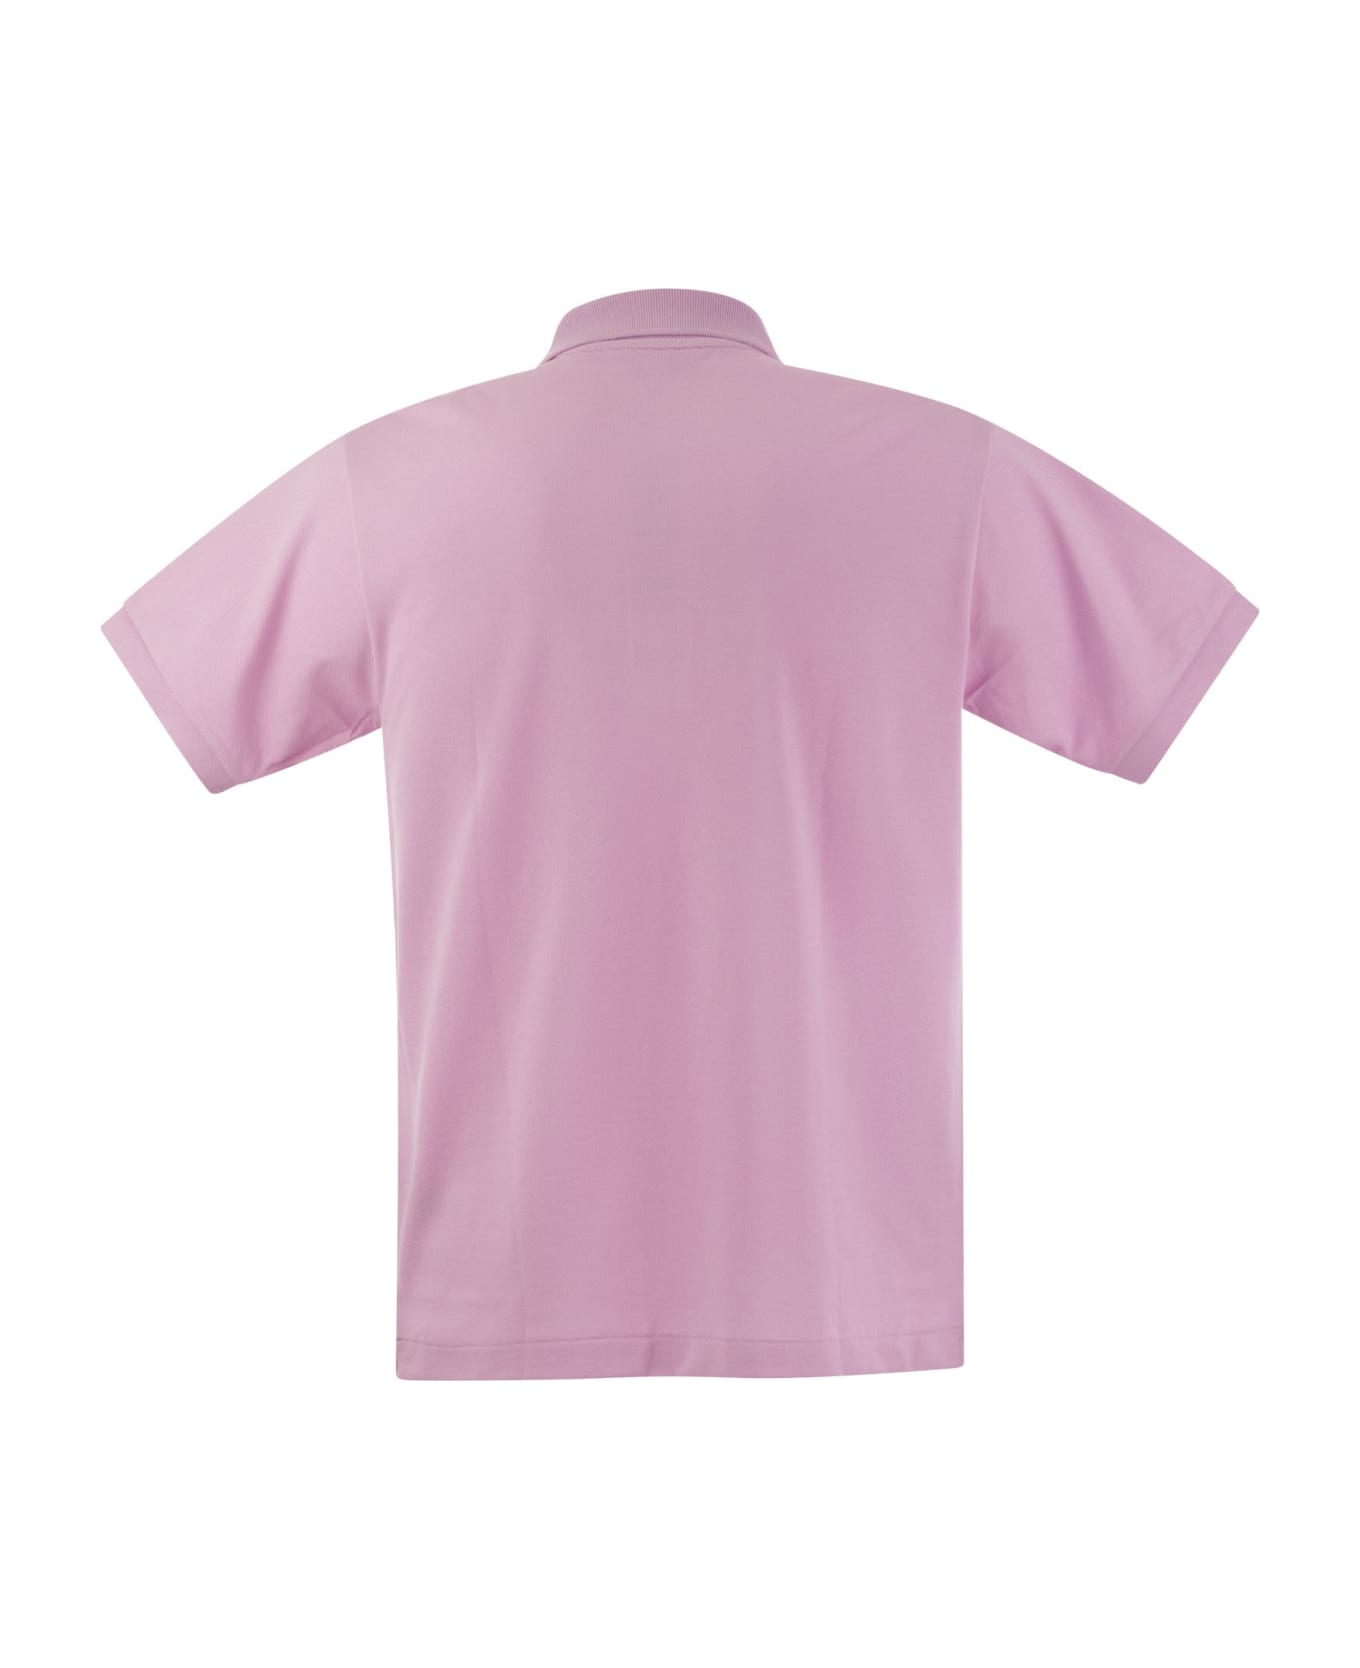 Lacoste Classic Fit Cotton Pique Polo Shirt - Glicine